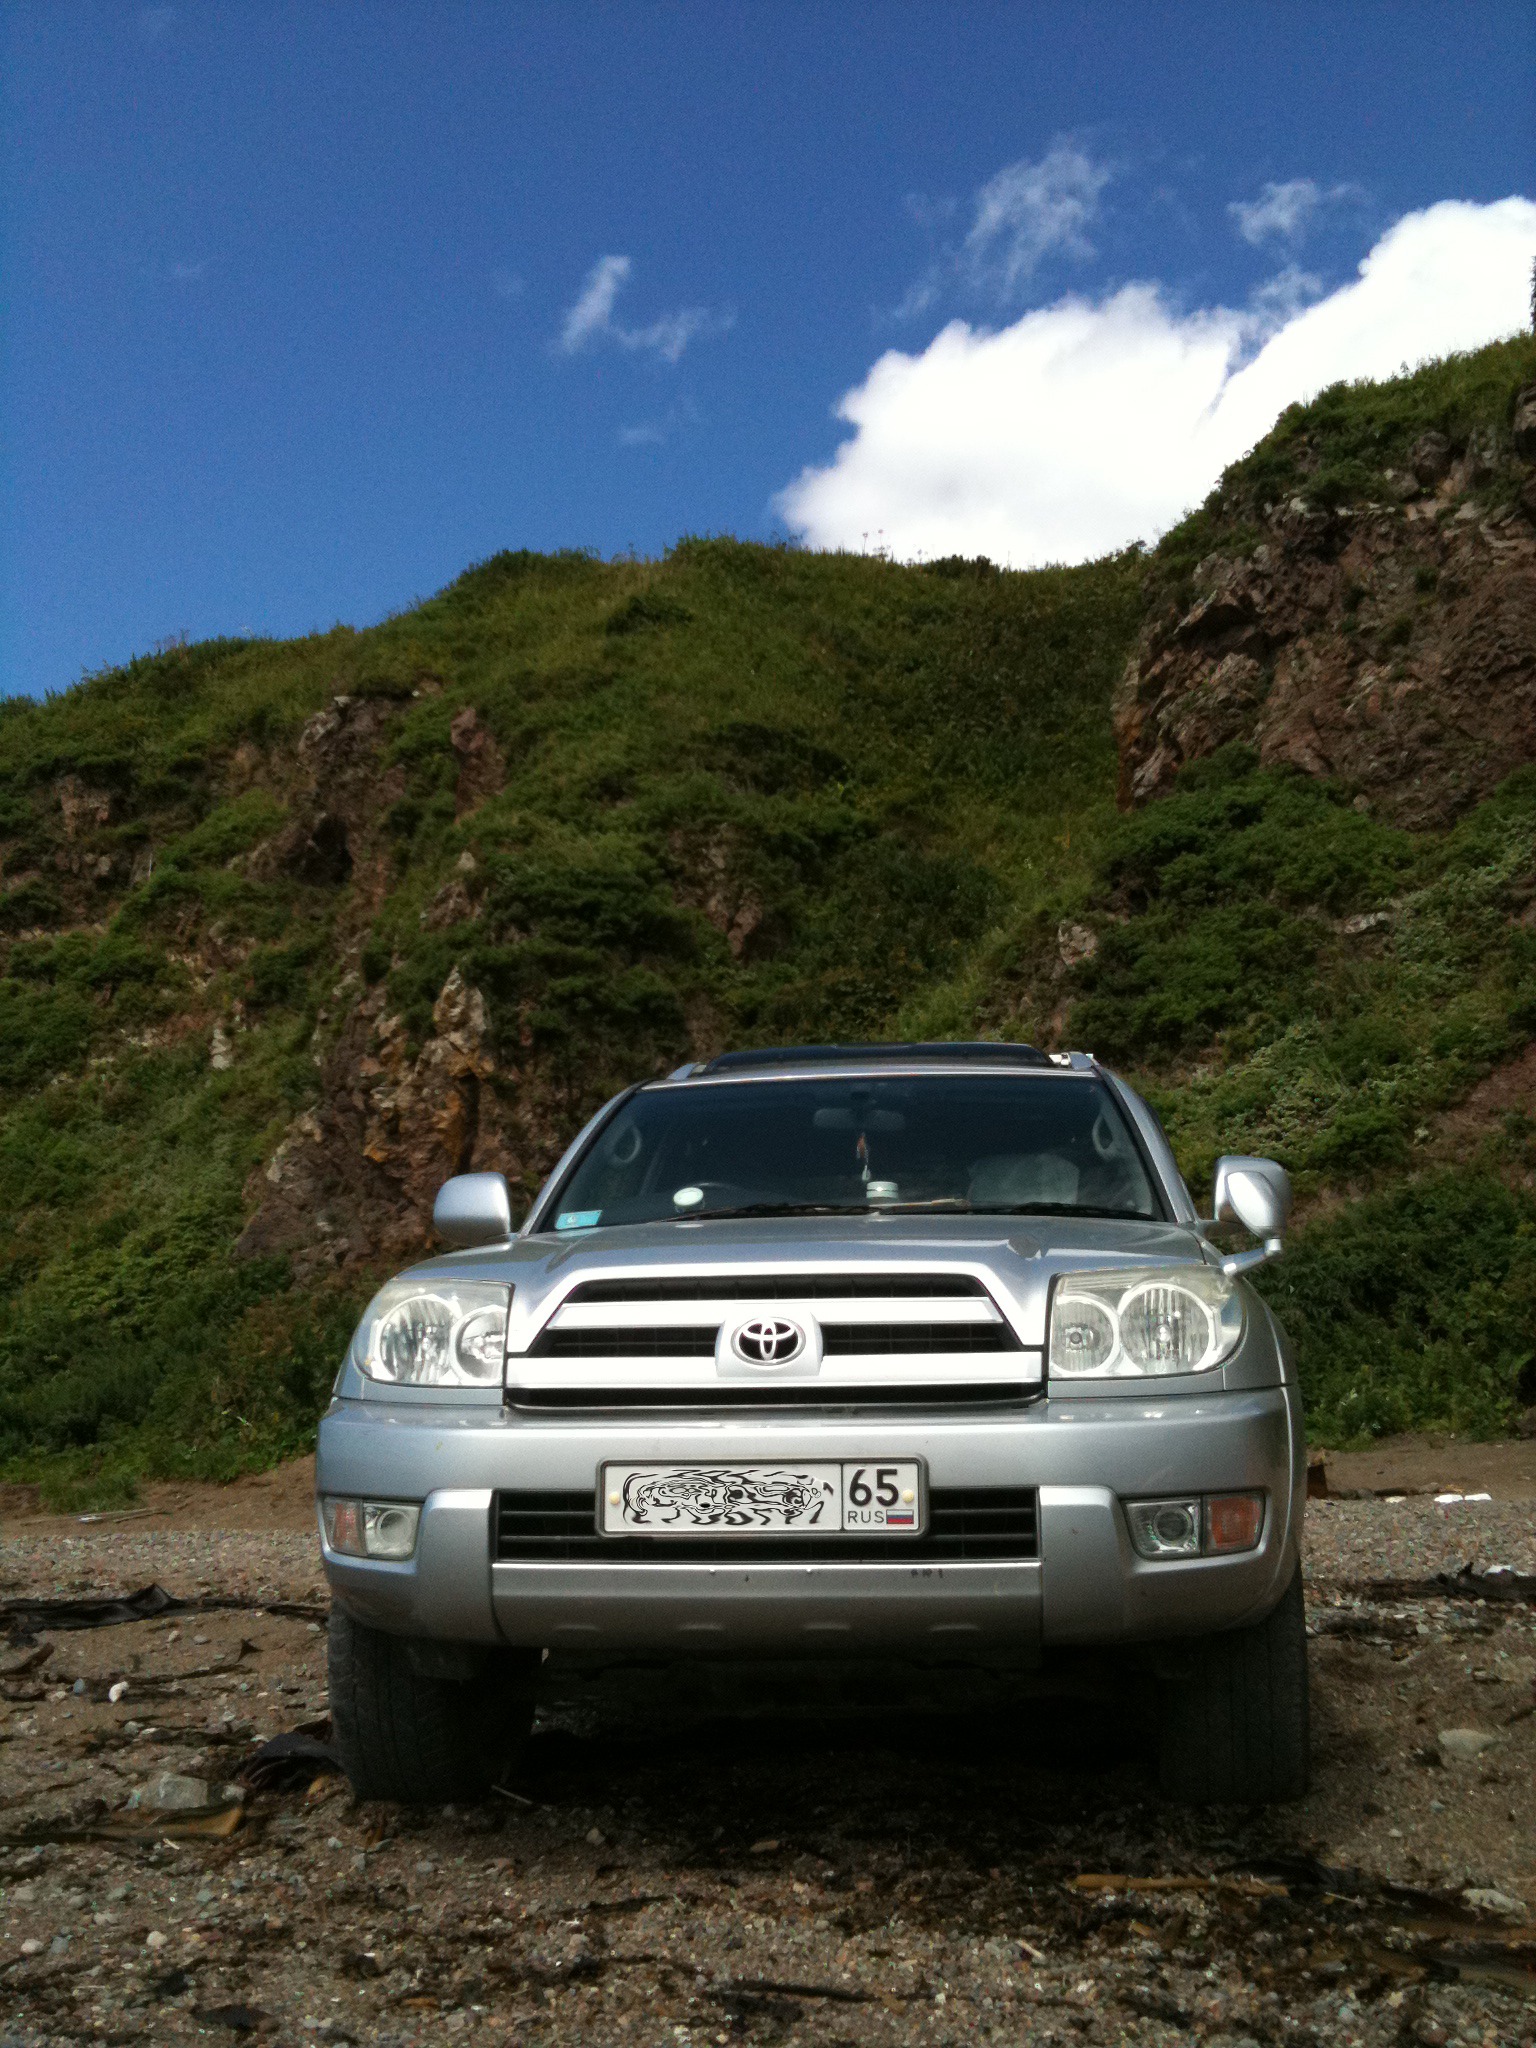      Toyota Hilux Surf 34 2002 